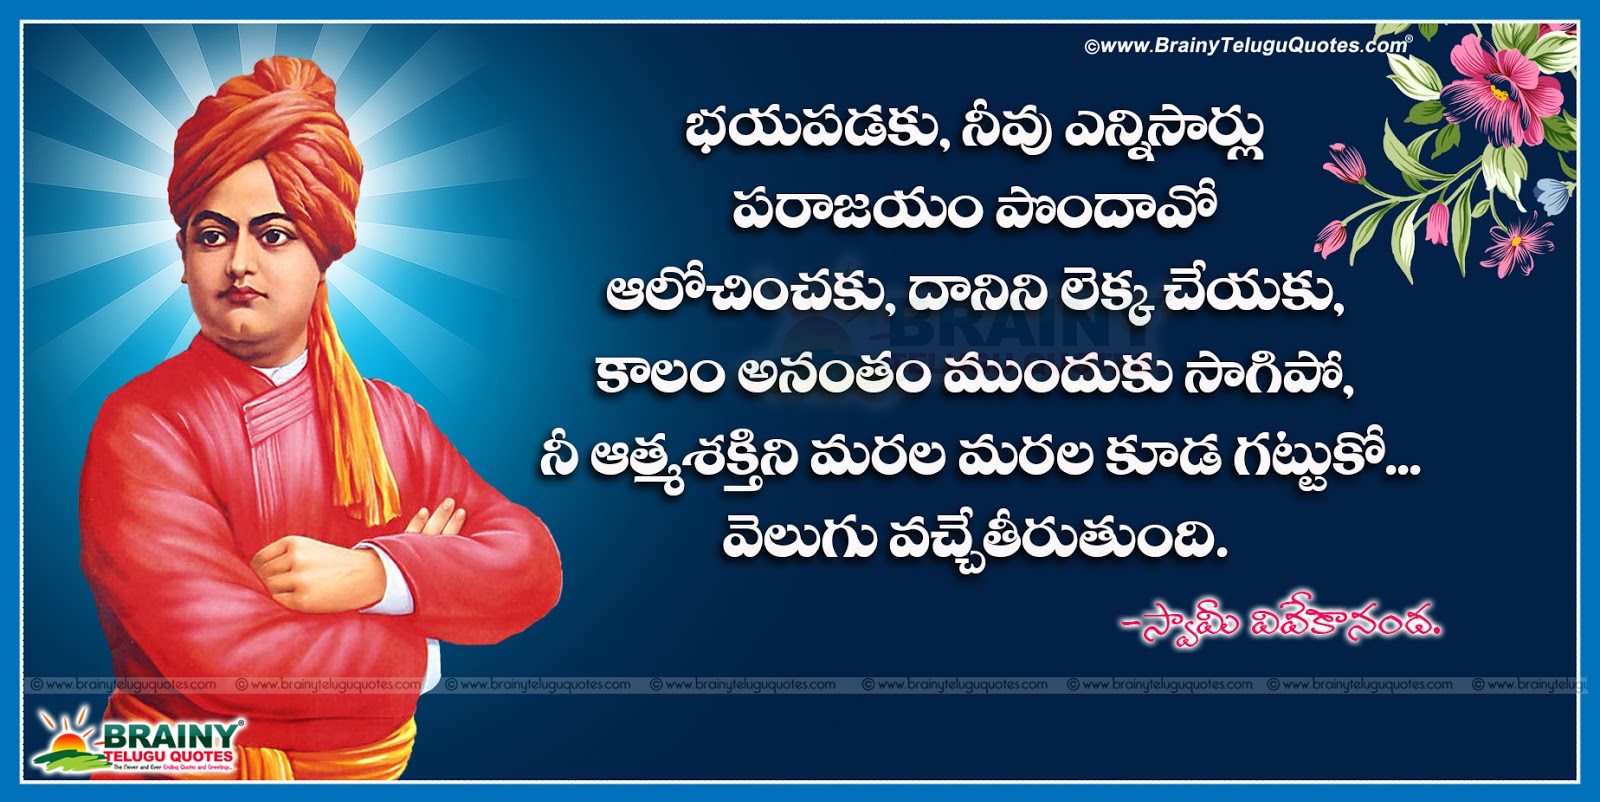 Famous Telugu Swami Vivekananda Life Goals Images, Secret of Success Quotes ...